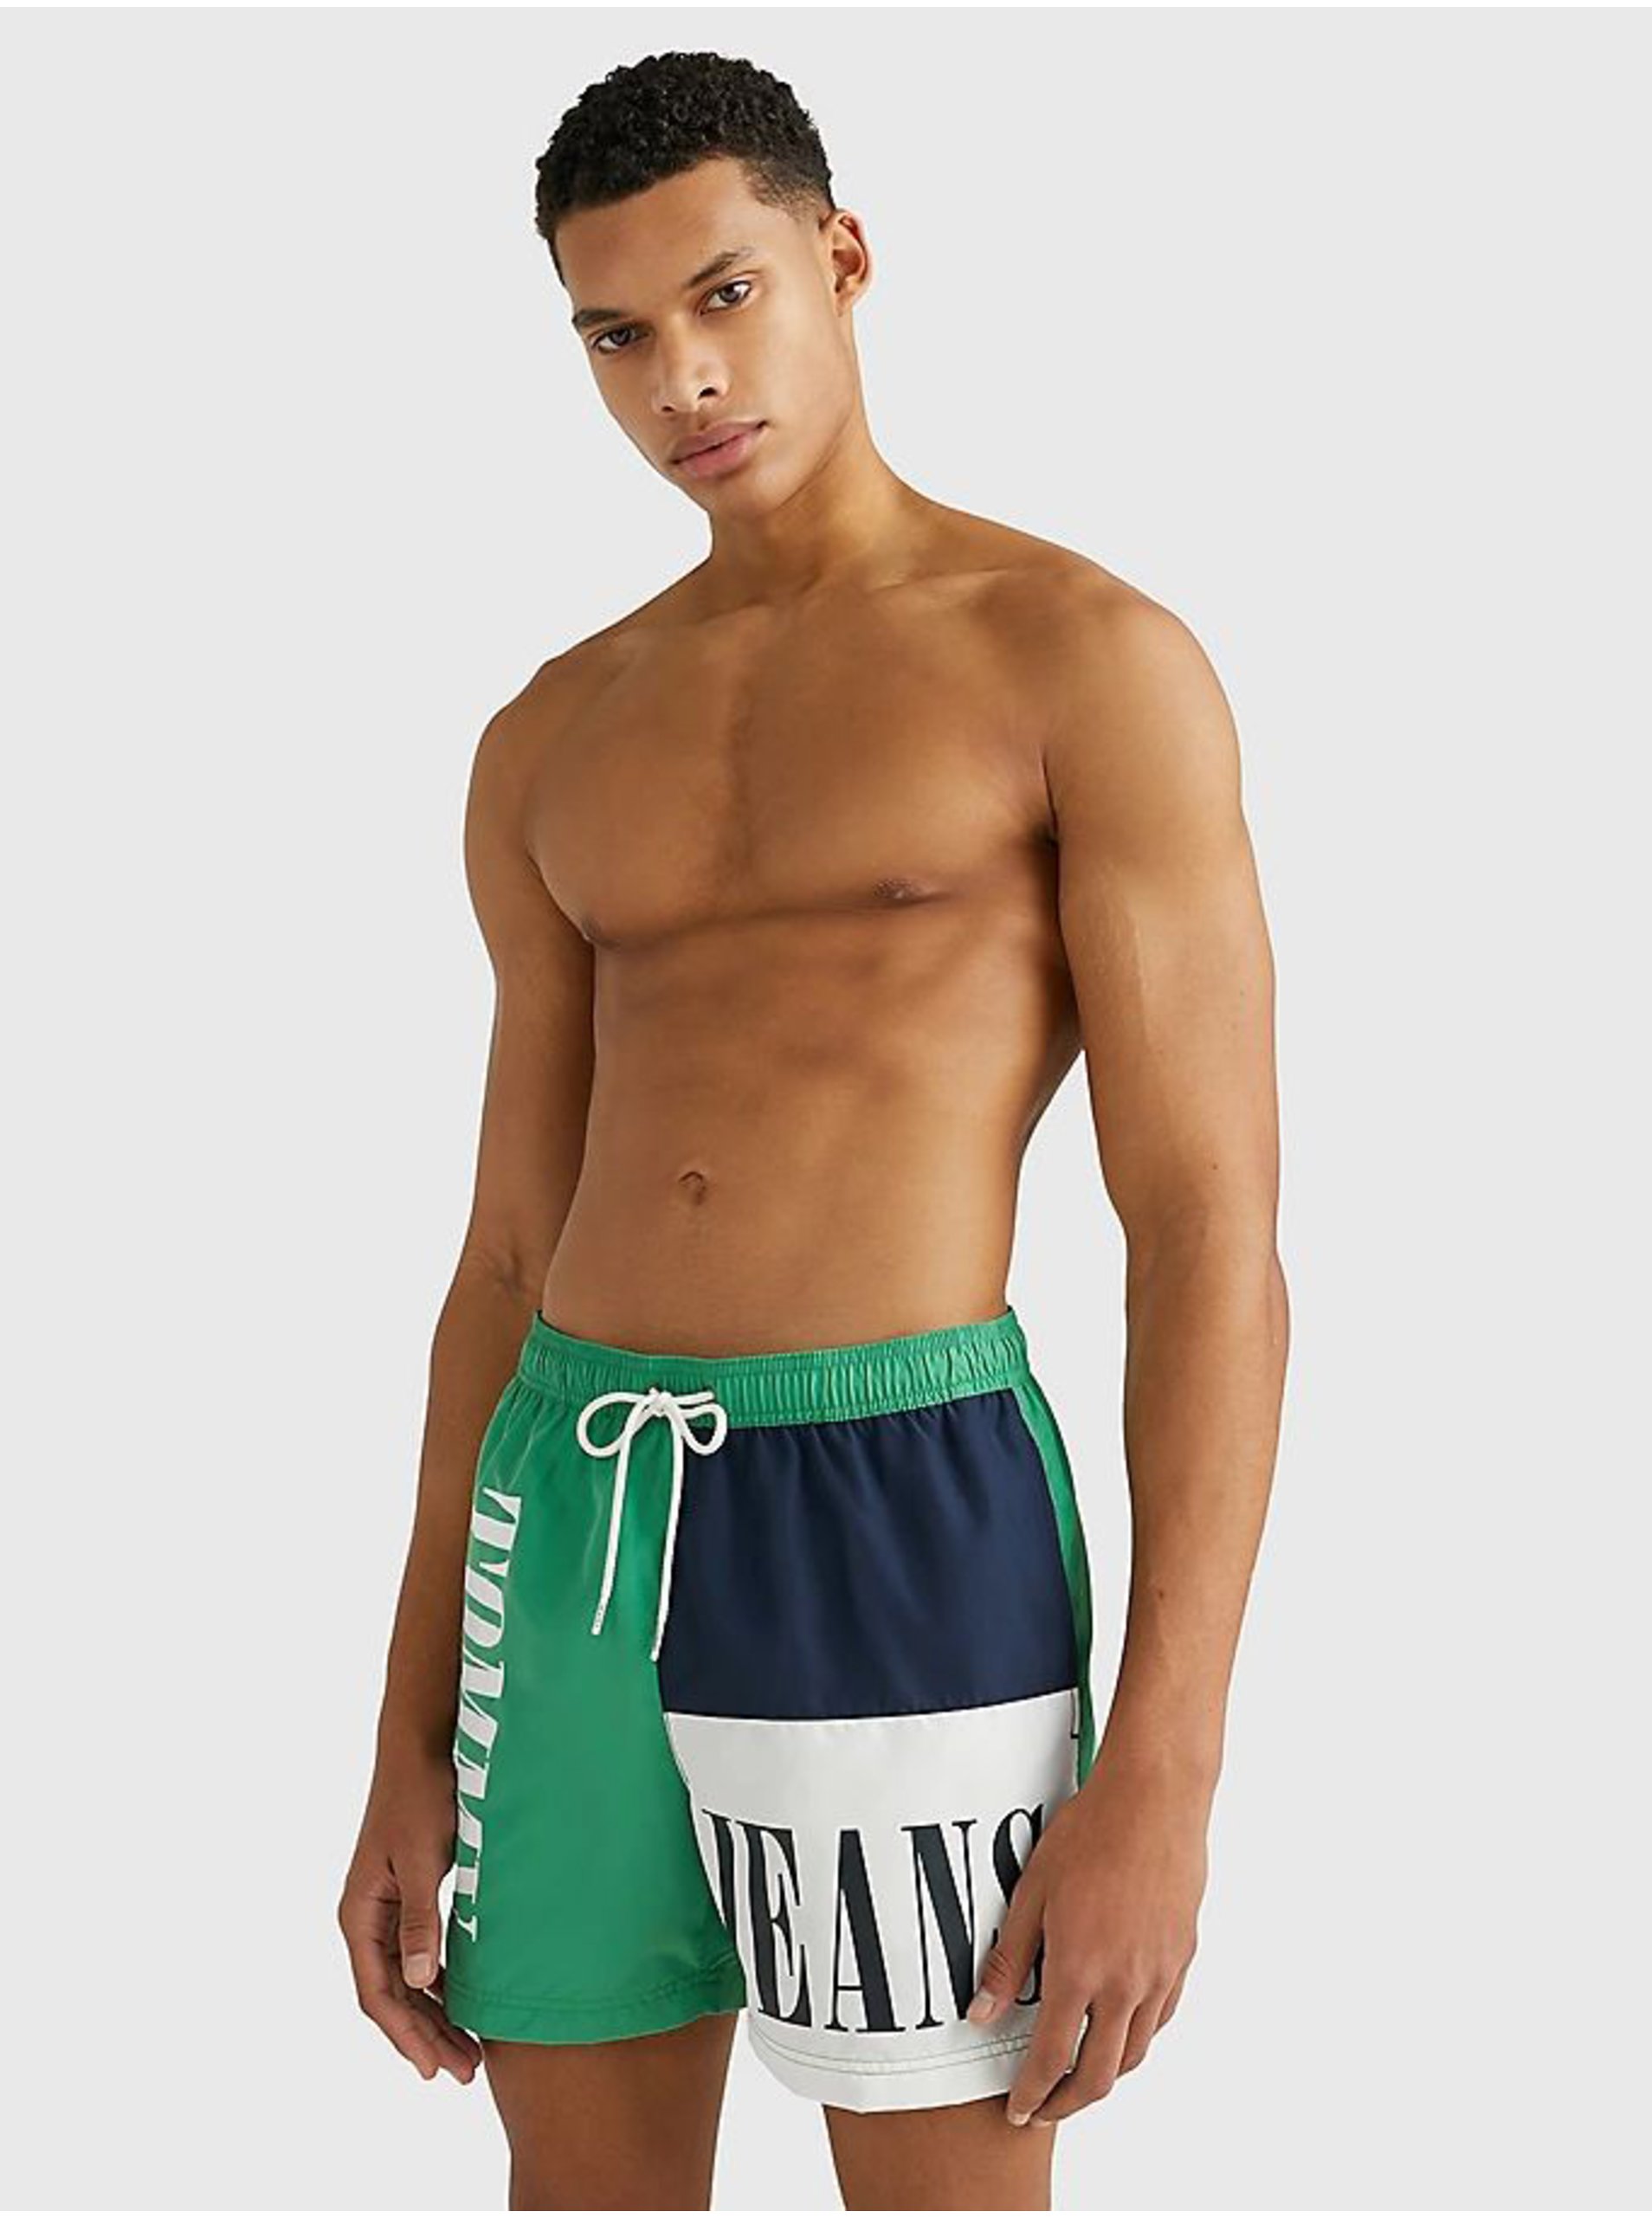 Lacno Plavky pre mužov Tommy Hilfiger Underwear - zelená, tmavomodrá, biela